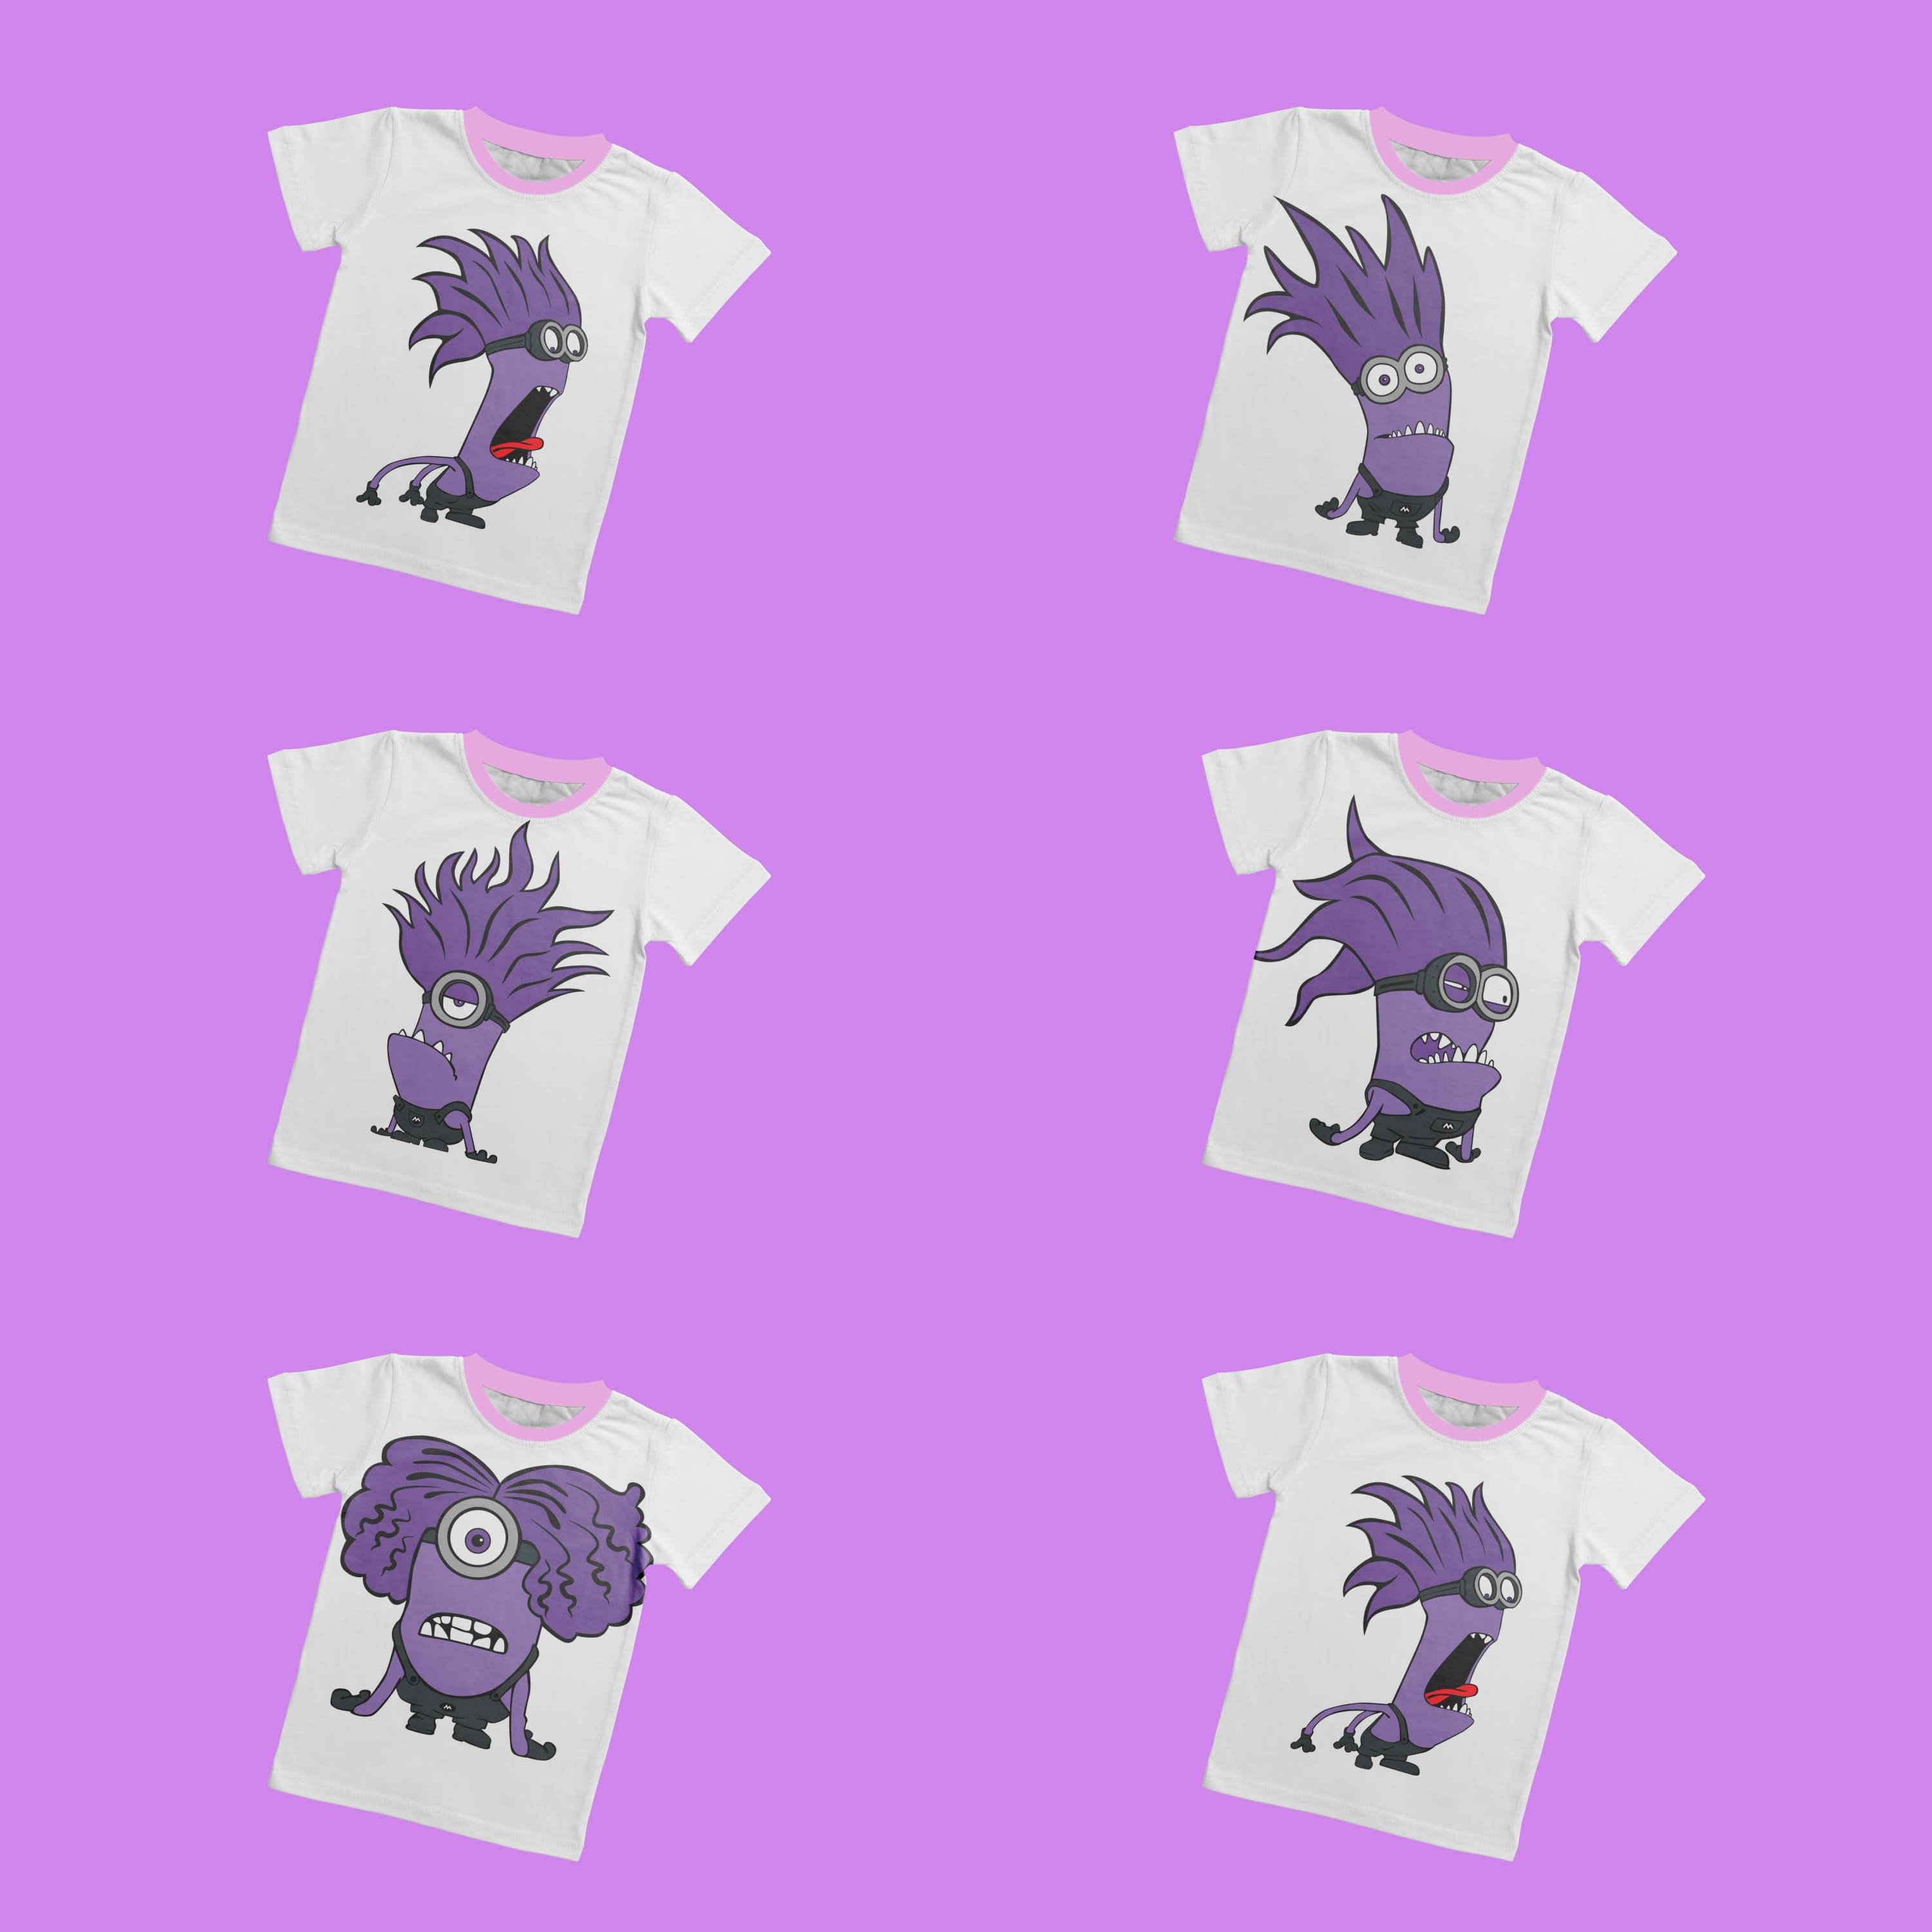 Purple Minion T-shirt Designs Cover.